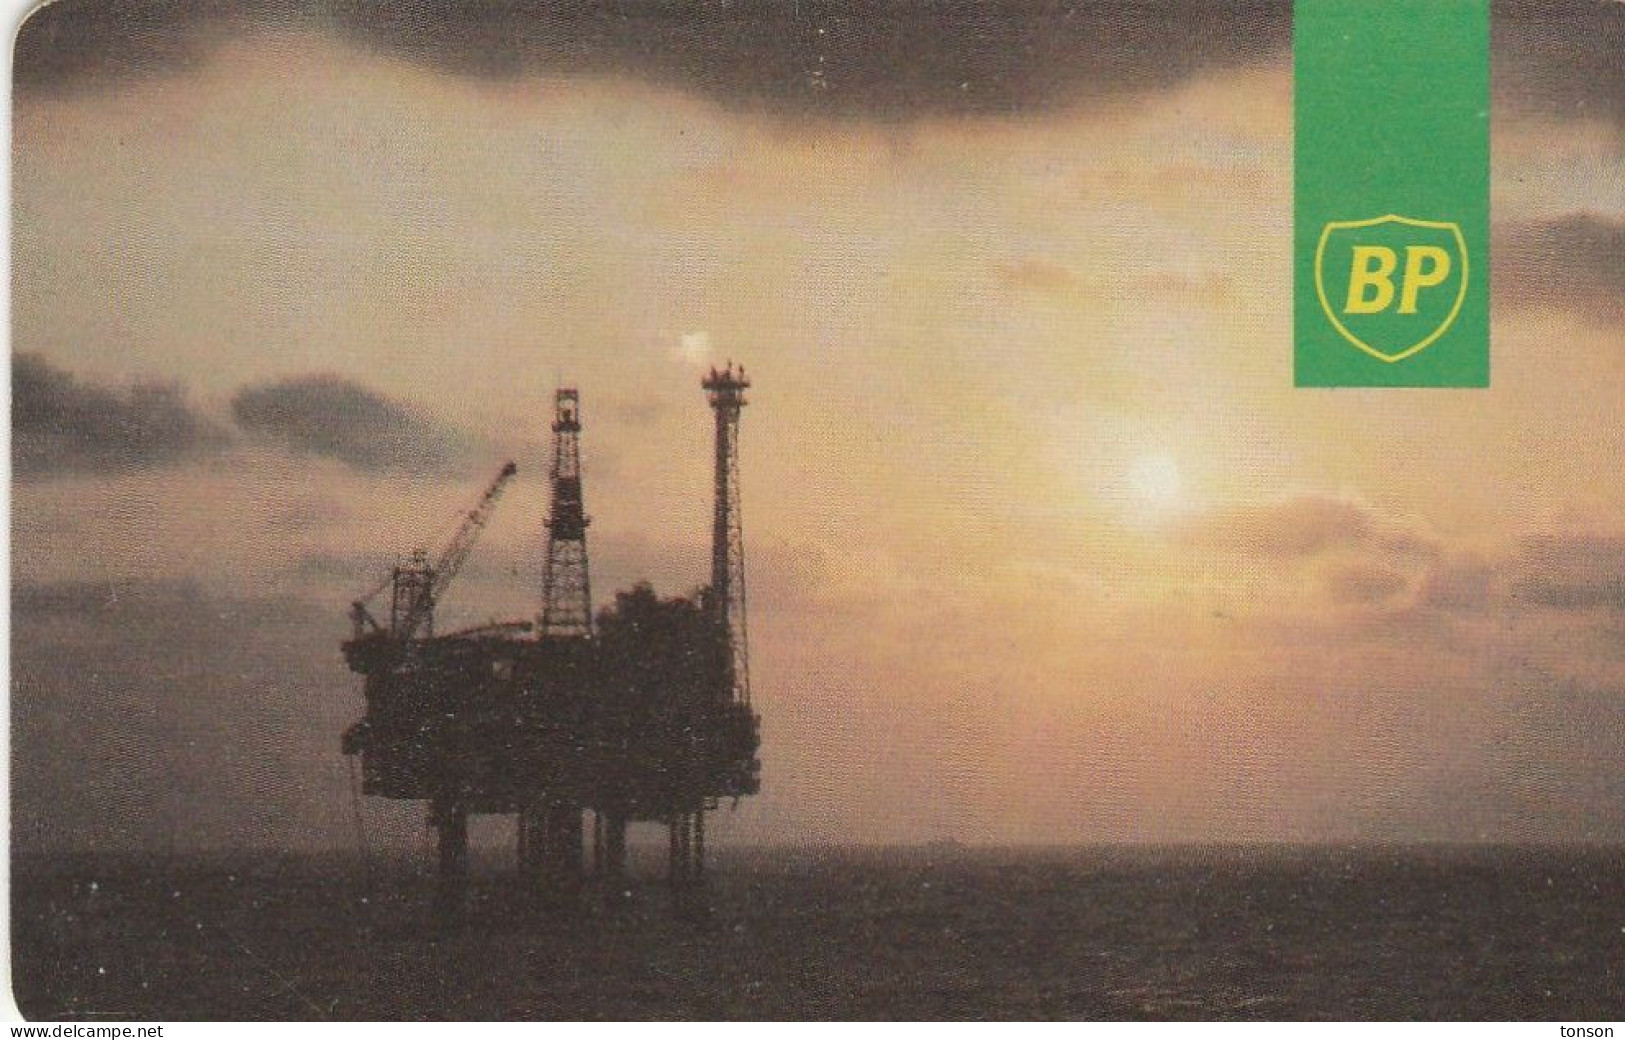 UK Oil Rig Phonecard - BP, GB-OIL-AUT-0001, BP (Blue IPL Logo), 20 Units, 2 Scans. - [ 2] Plataformas Petroleras